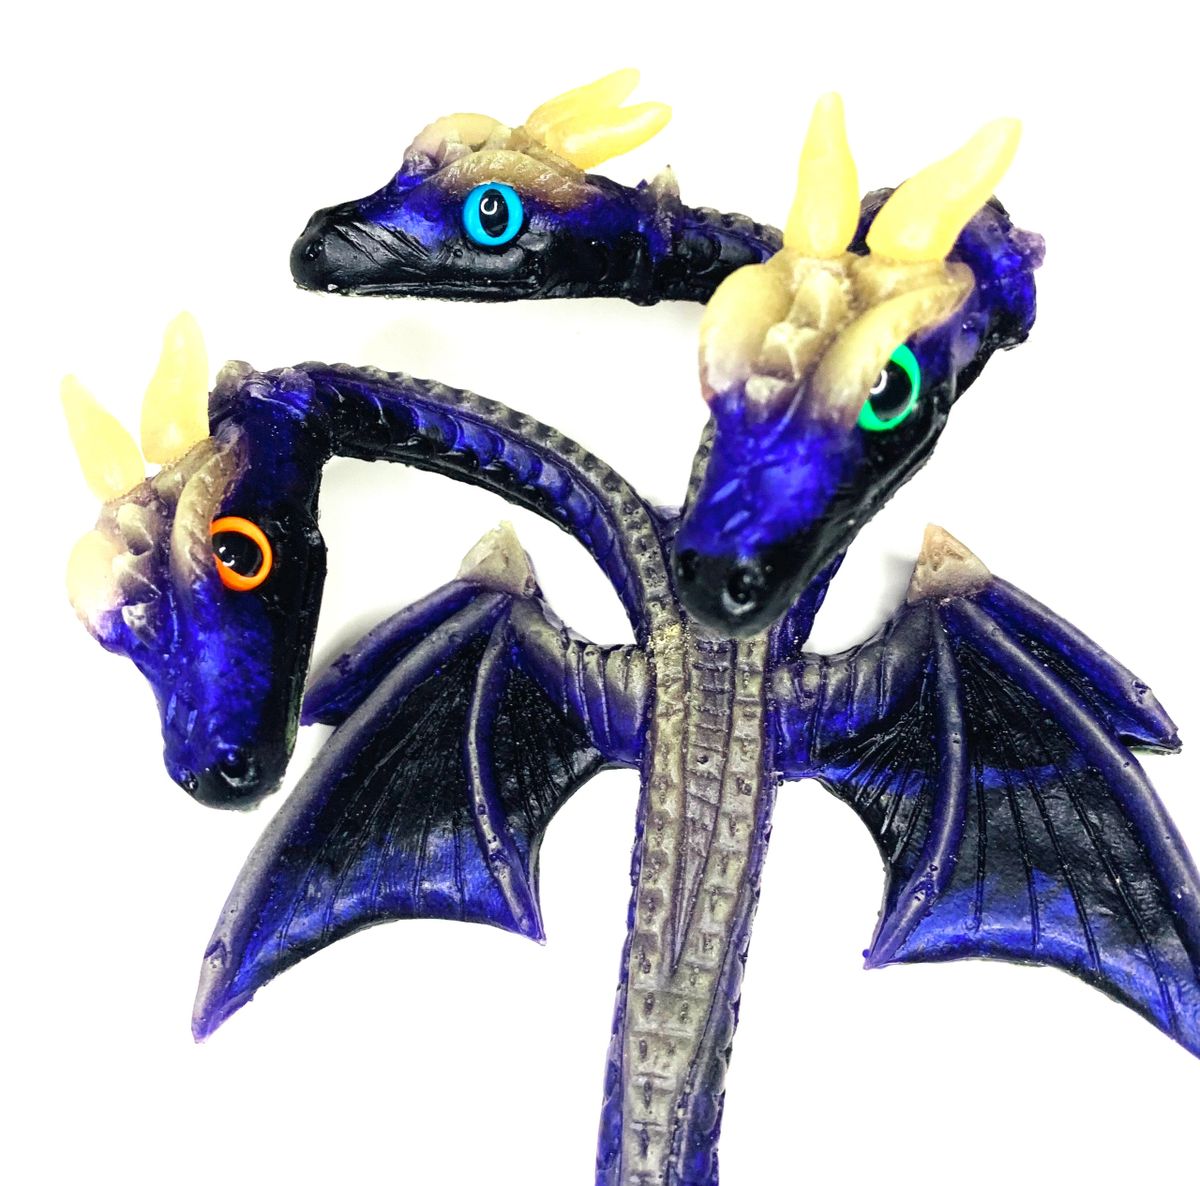 three headed dragon toy